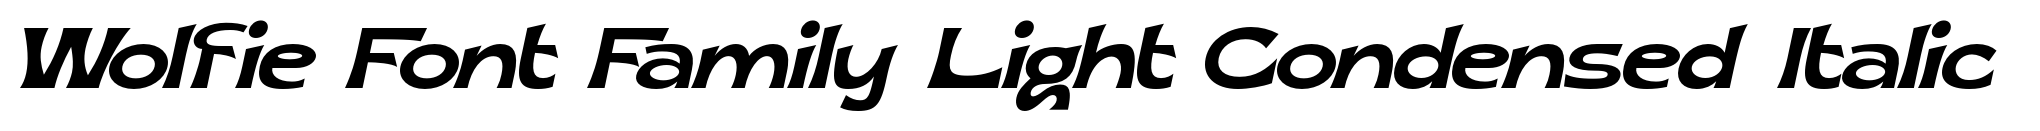 Wolfie Font Family Light Condensed Italic image